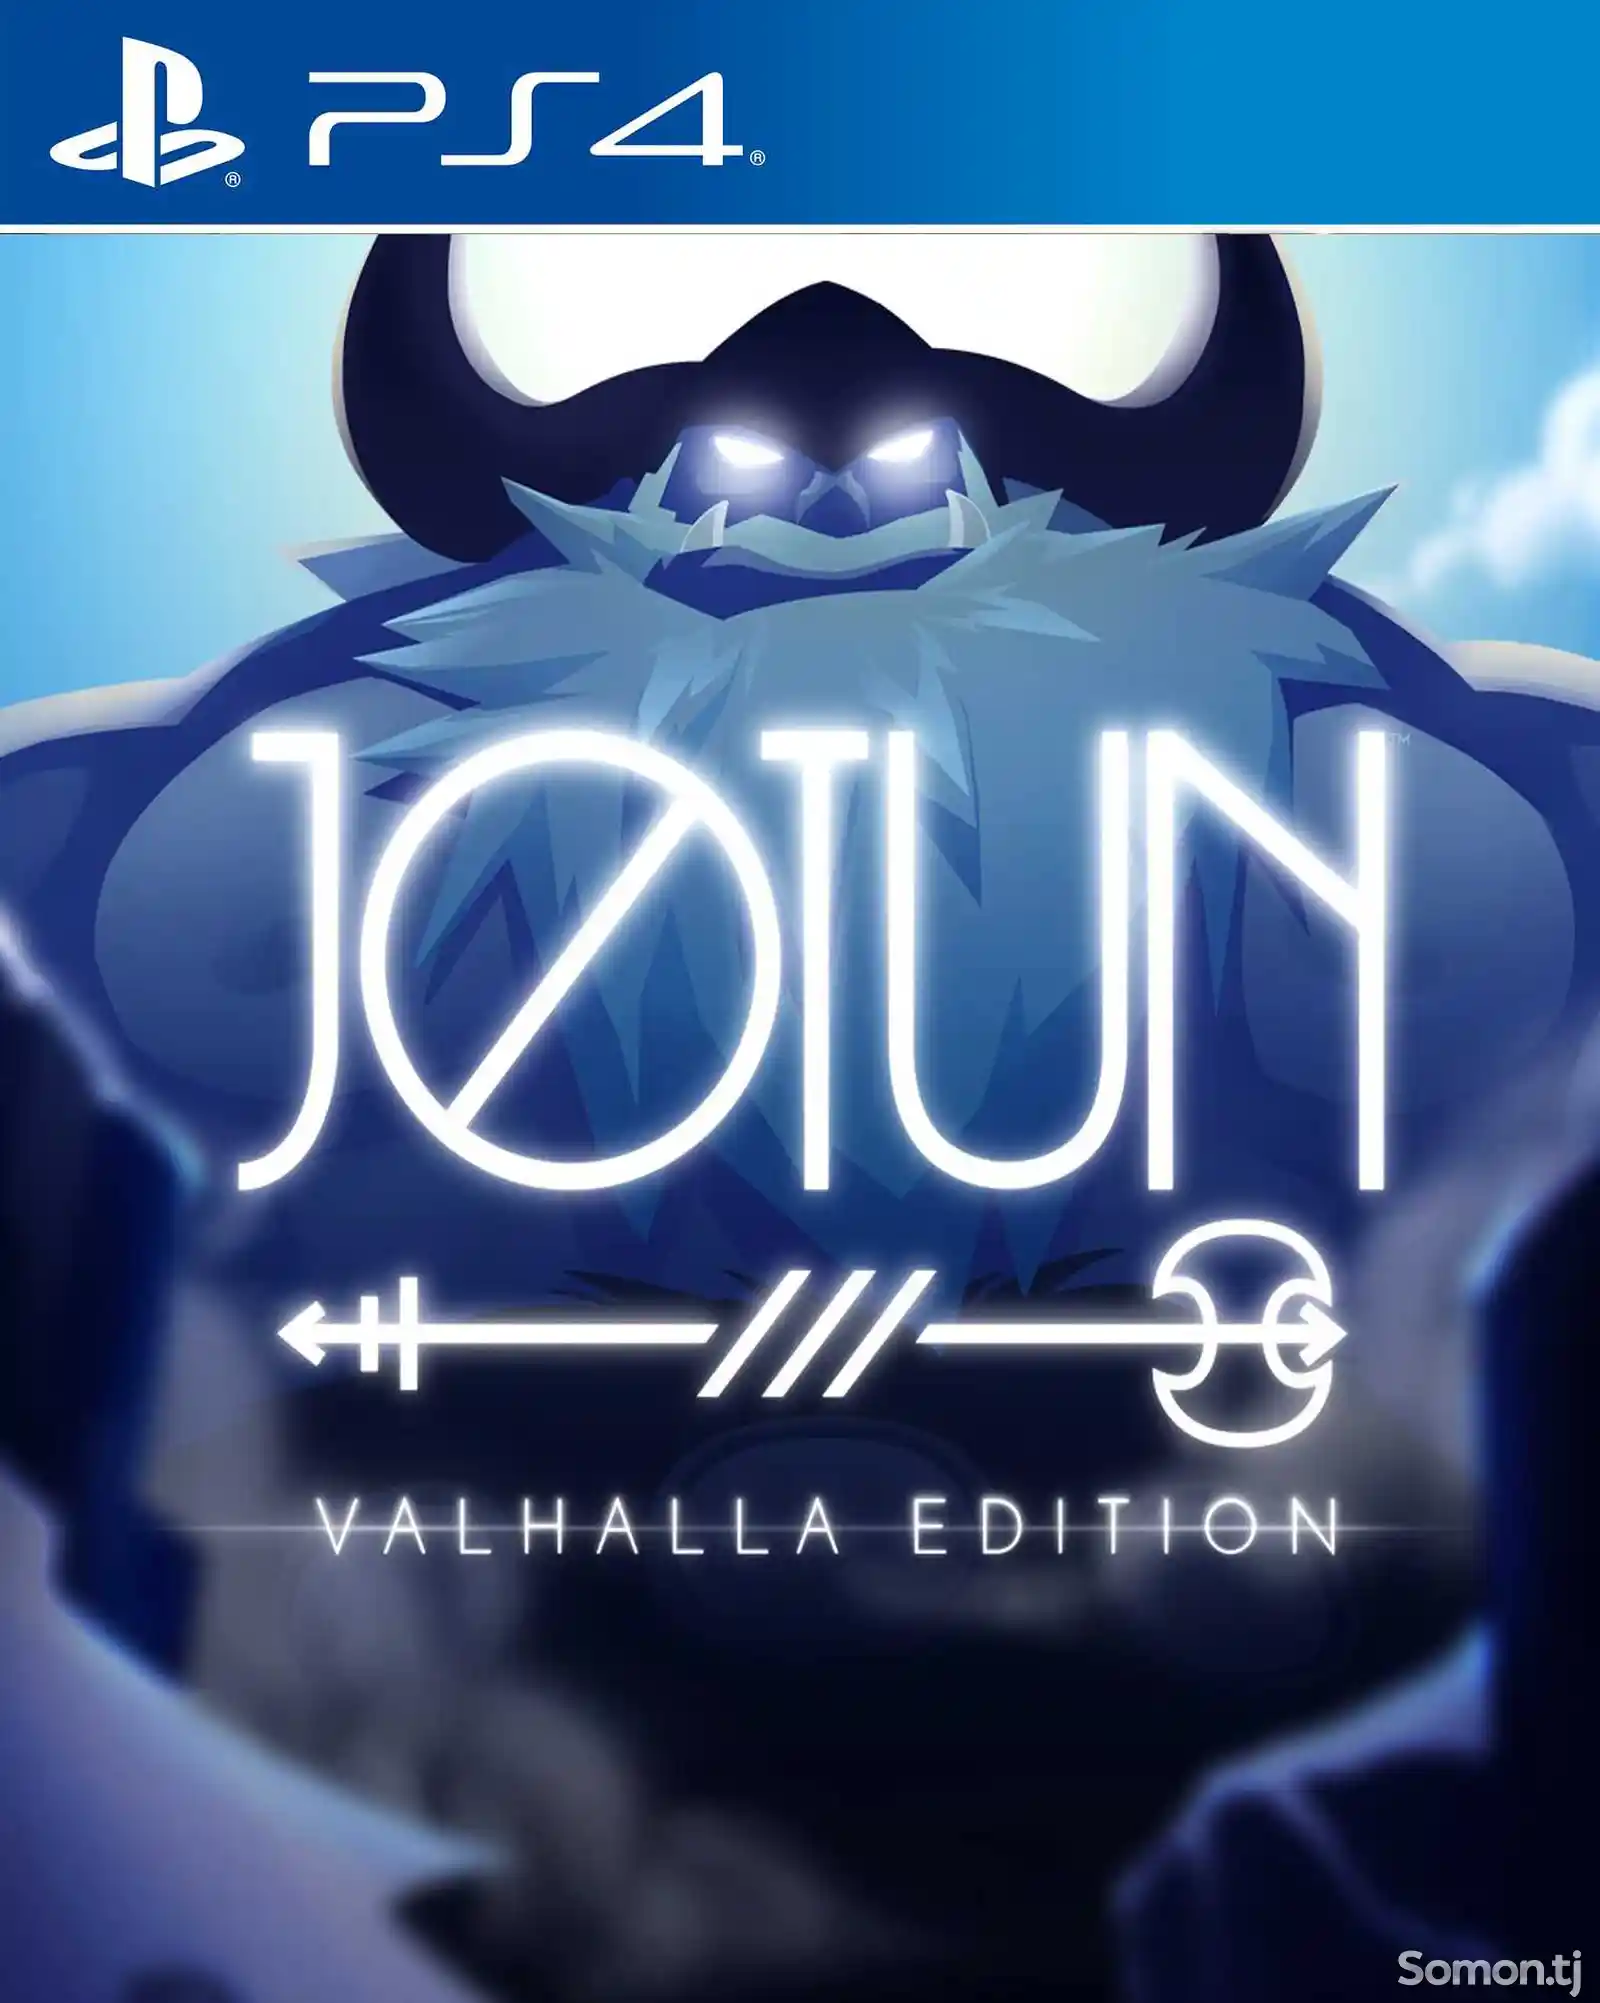 Игра Jotun valhalla для PS-4 / 5.05 / 6.72 / 7.02 / 7.55 / 9.00 /-1